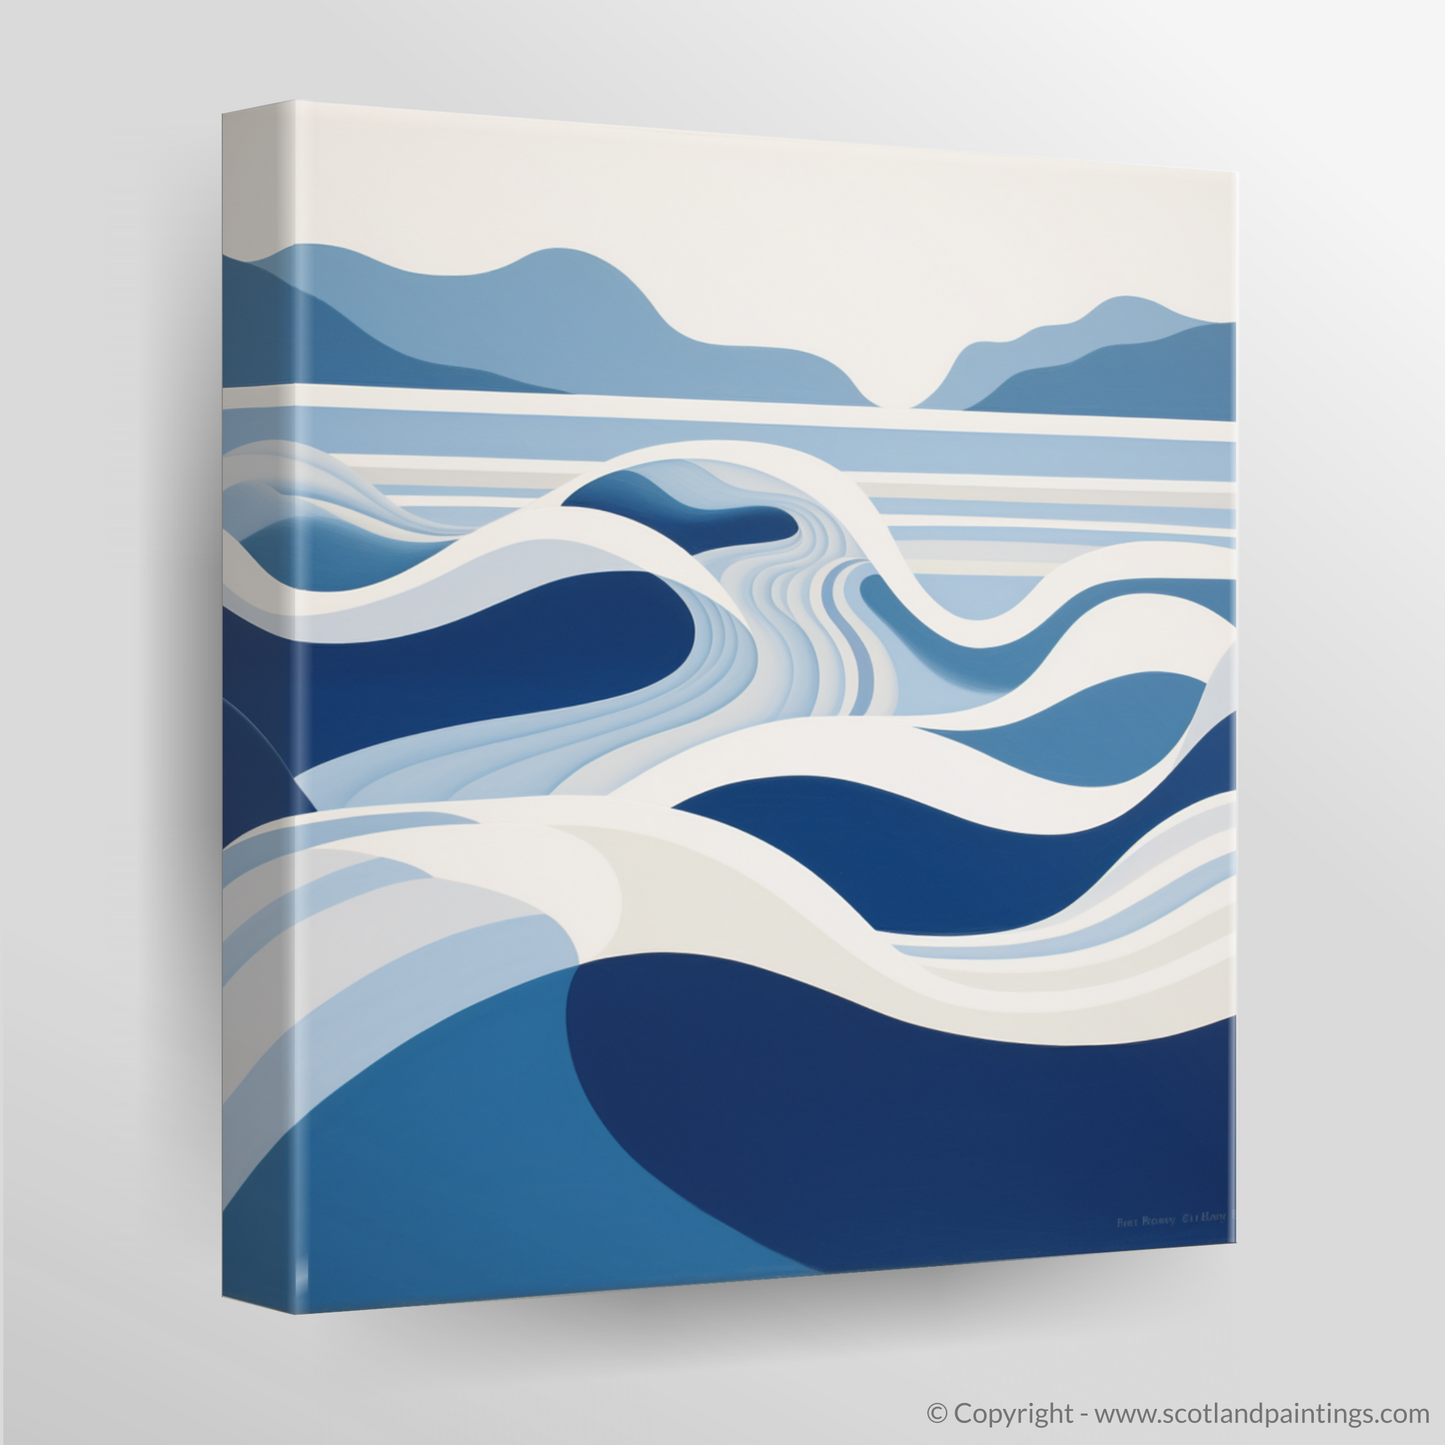 Serenade of the Scottish Seas: An Abstract Interpretation of Kiloran Bay